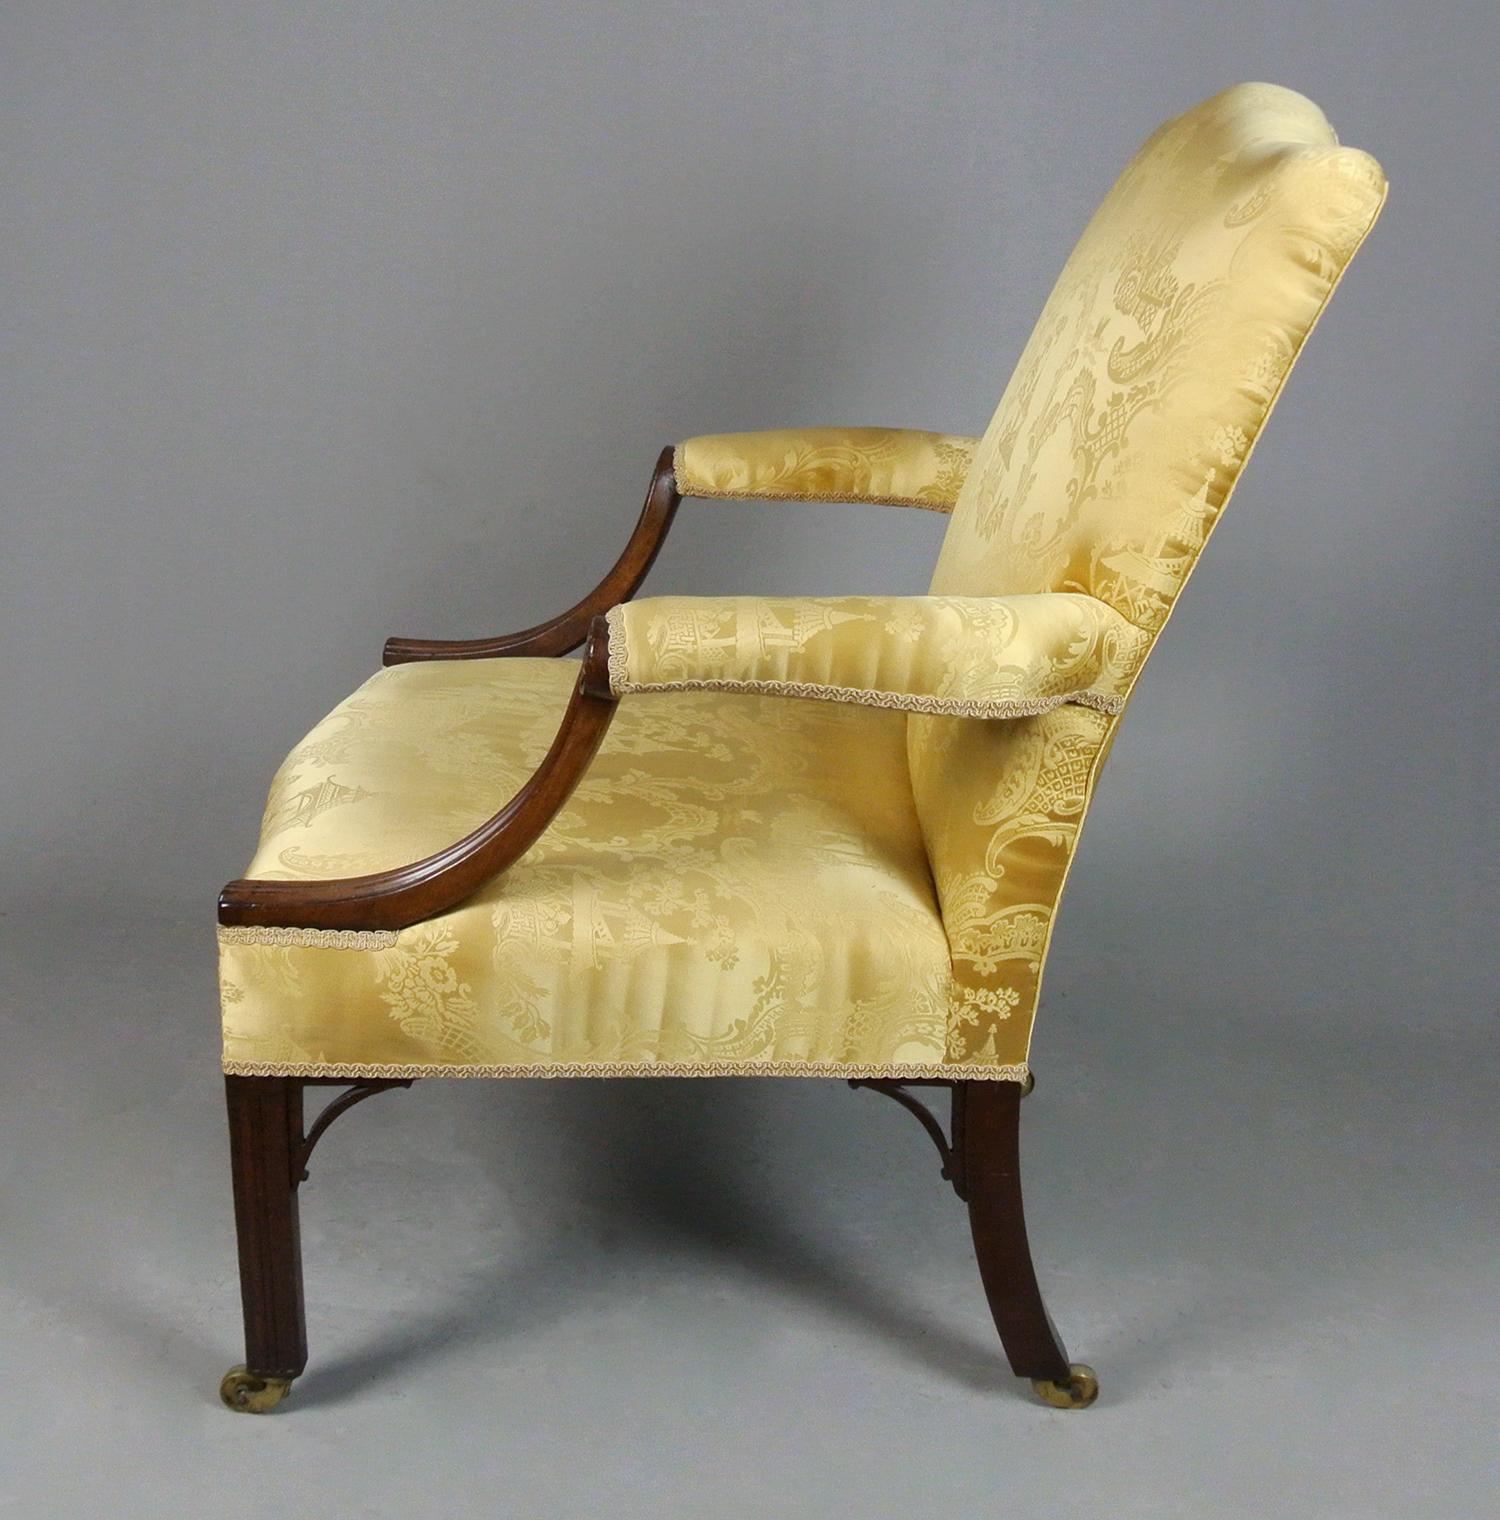 Exemplary George II Mahogany Gainsborough Chair c.1750 For Sale 1